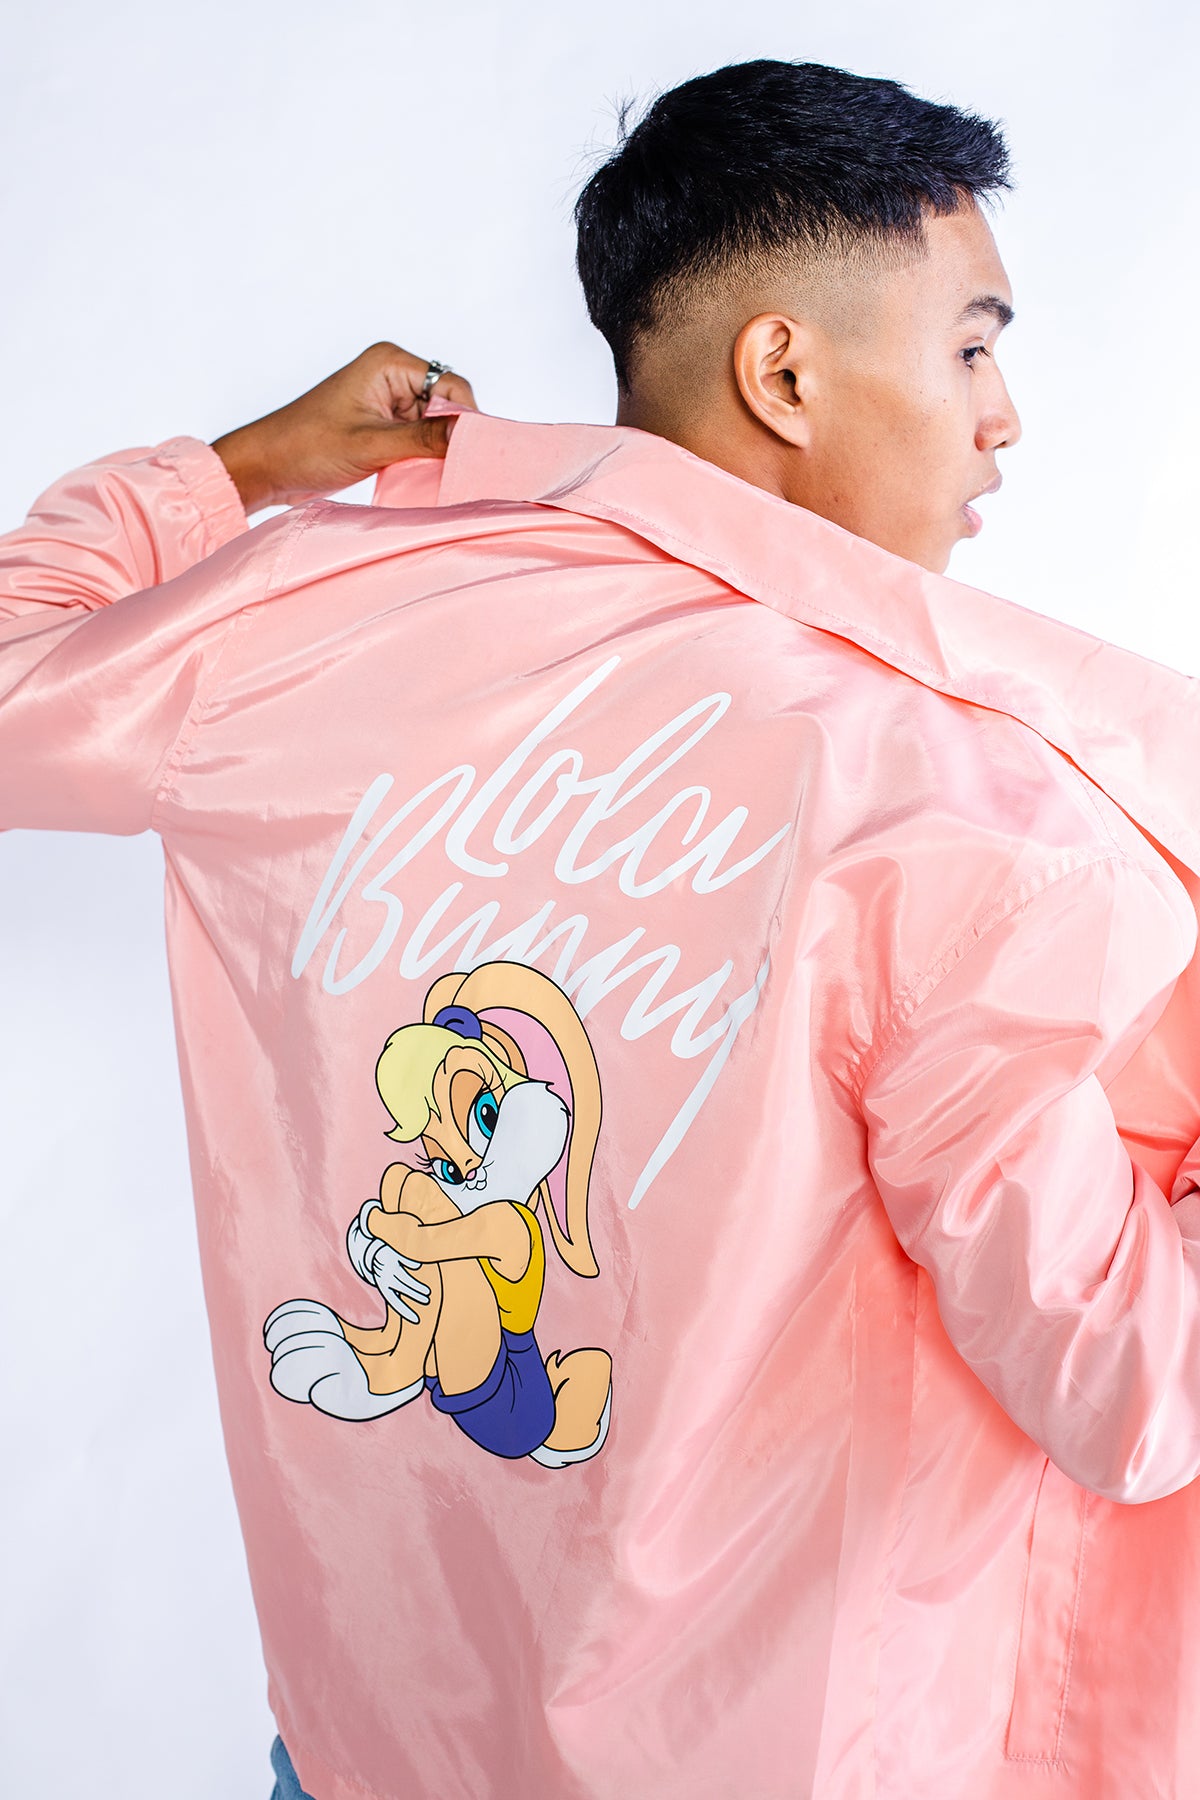 PMC x Looney Tunes Lola Bunny Coaches Jacket Pink